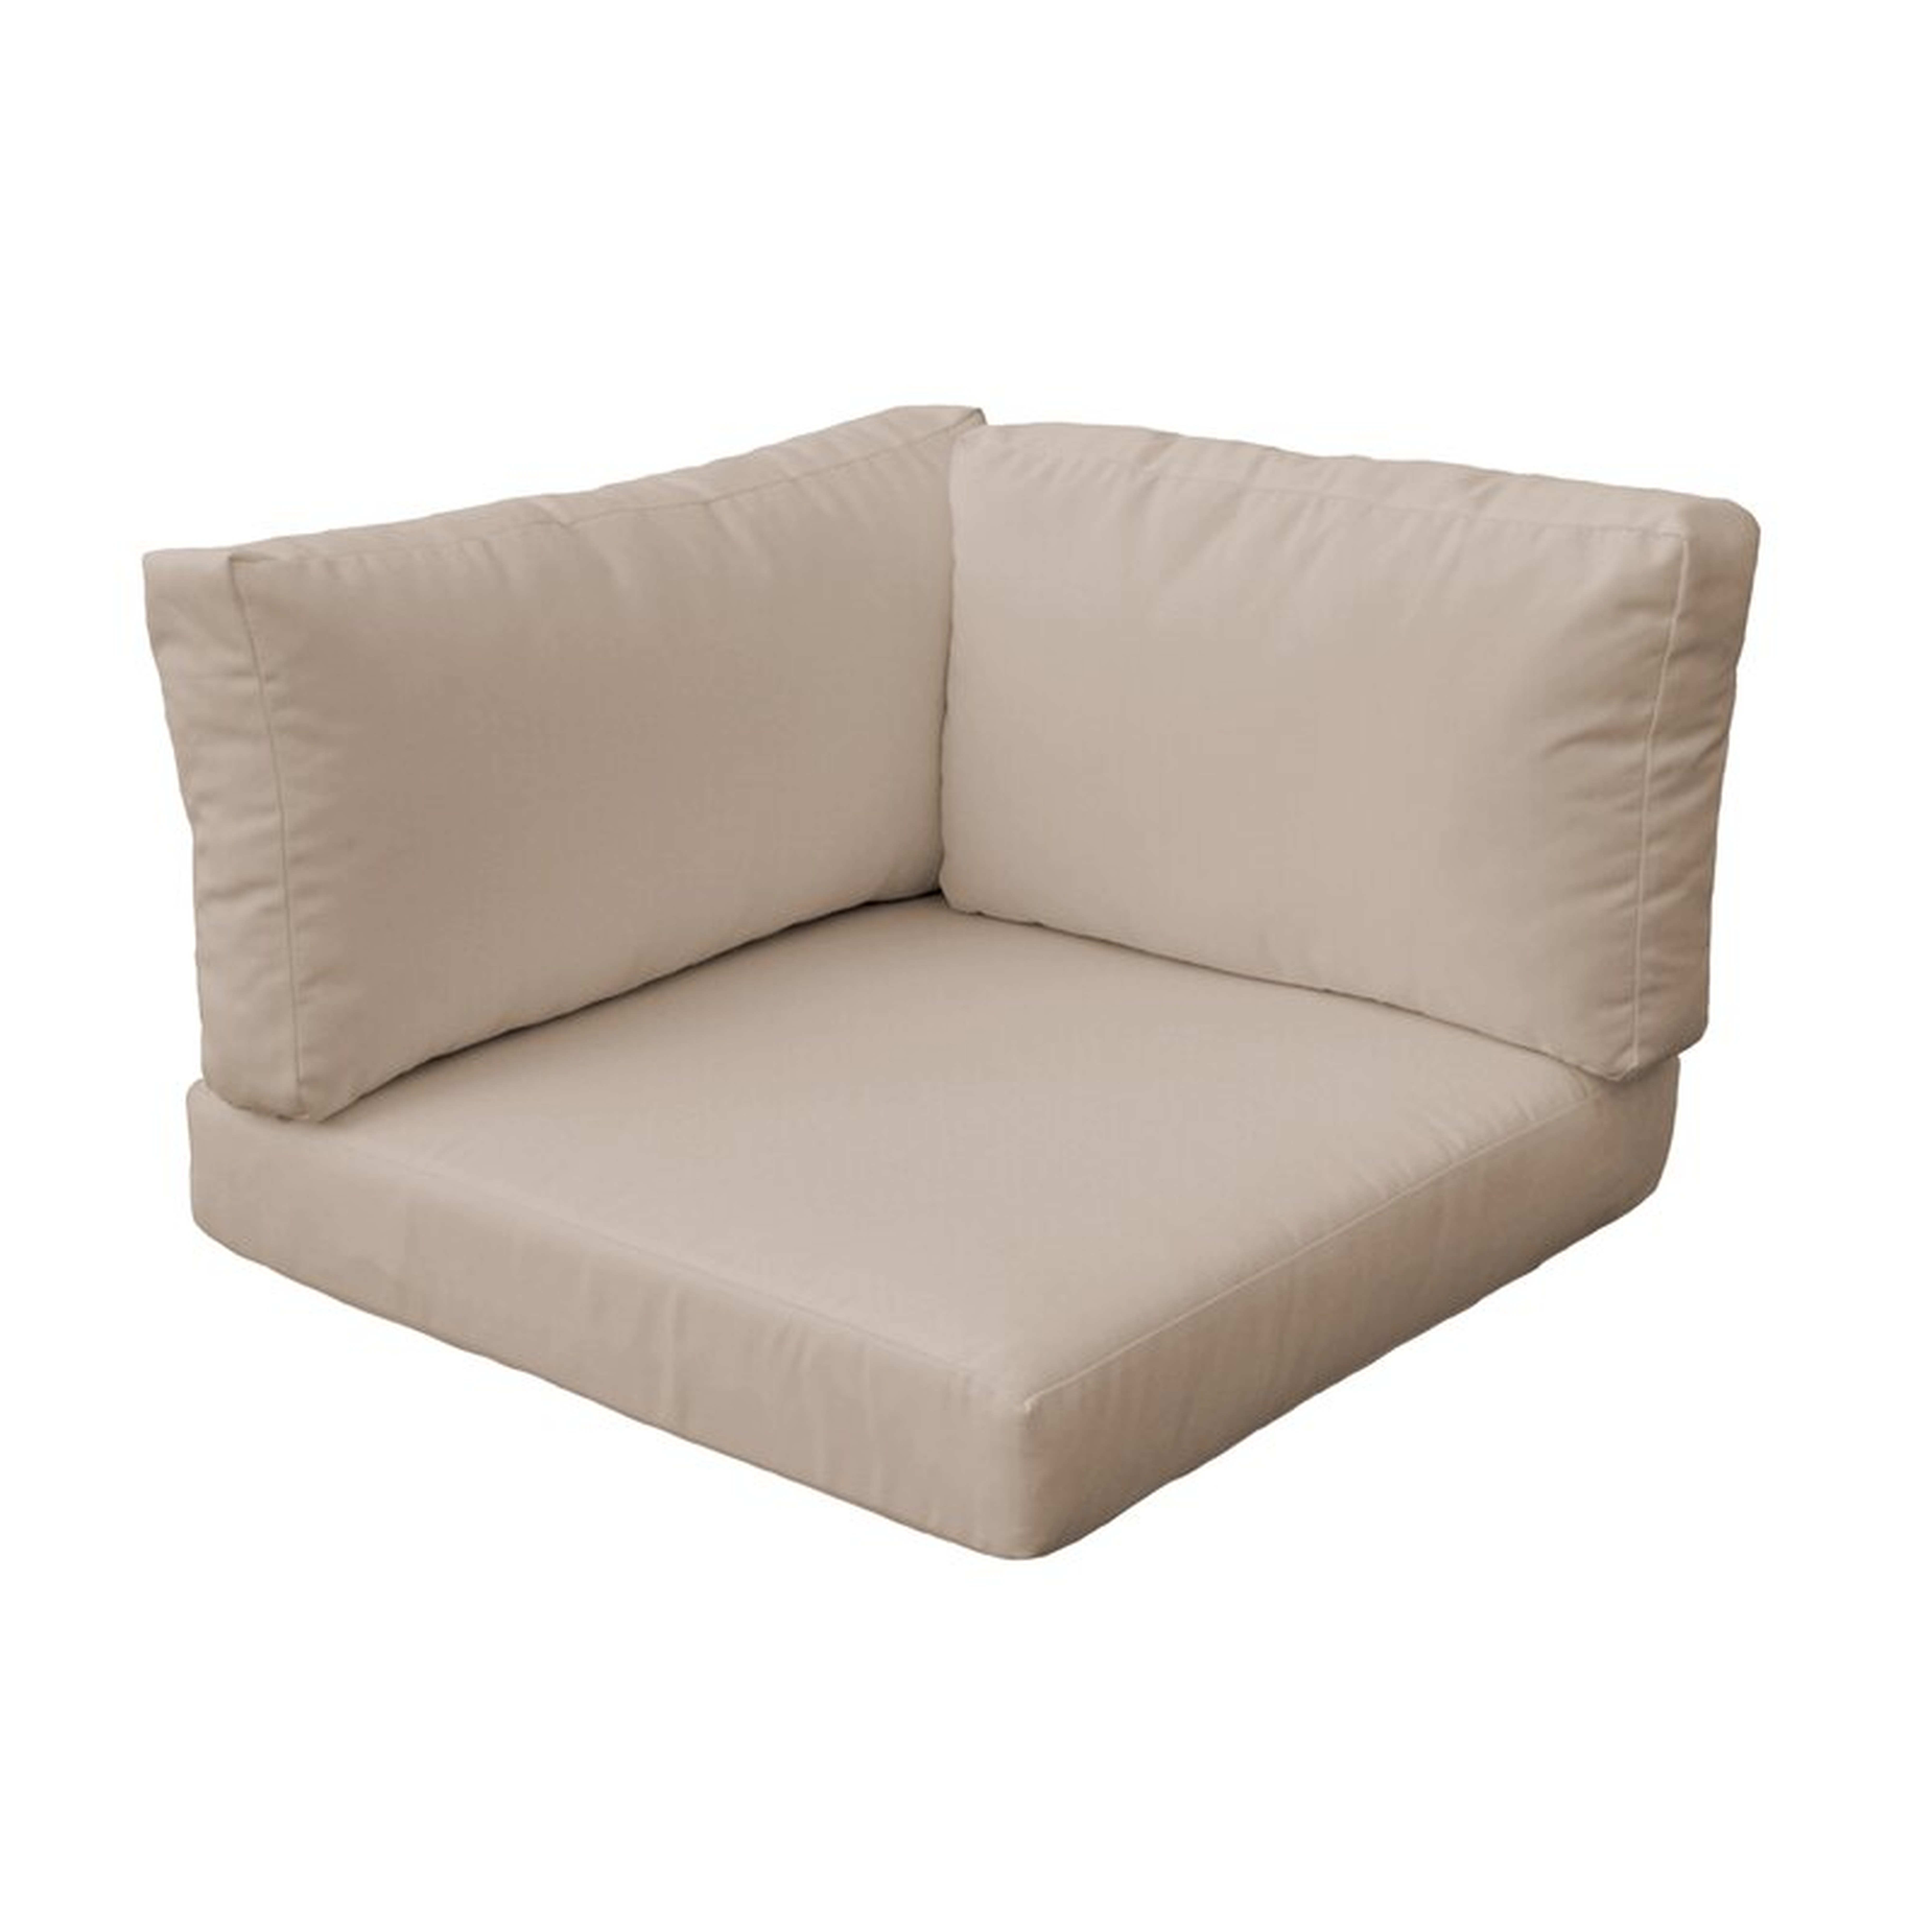 Indoor/Outdoor Cushion Cover - Wayfair